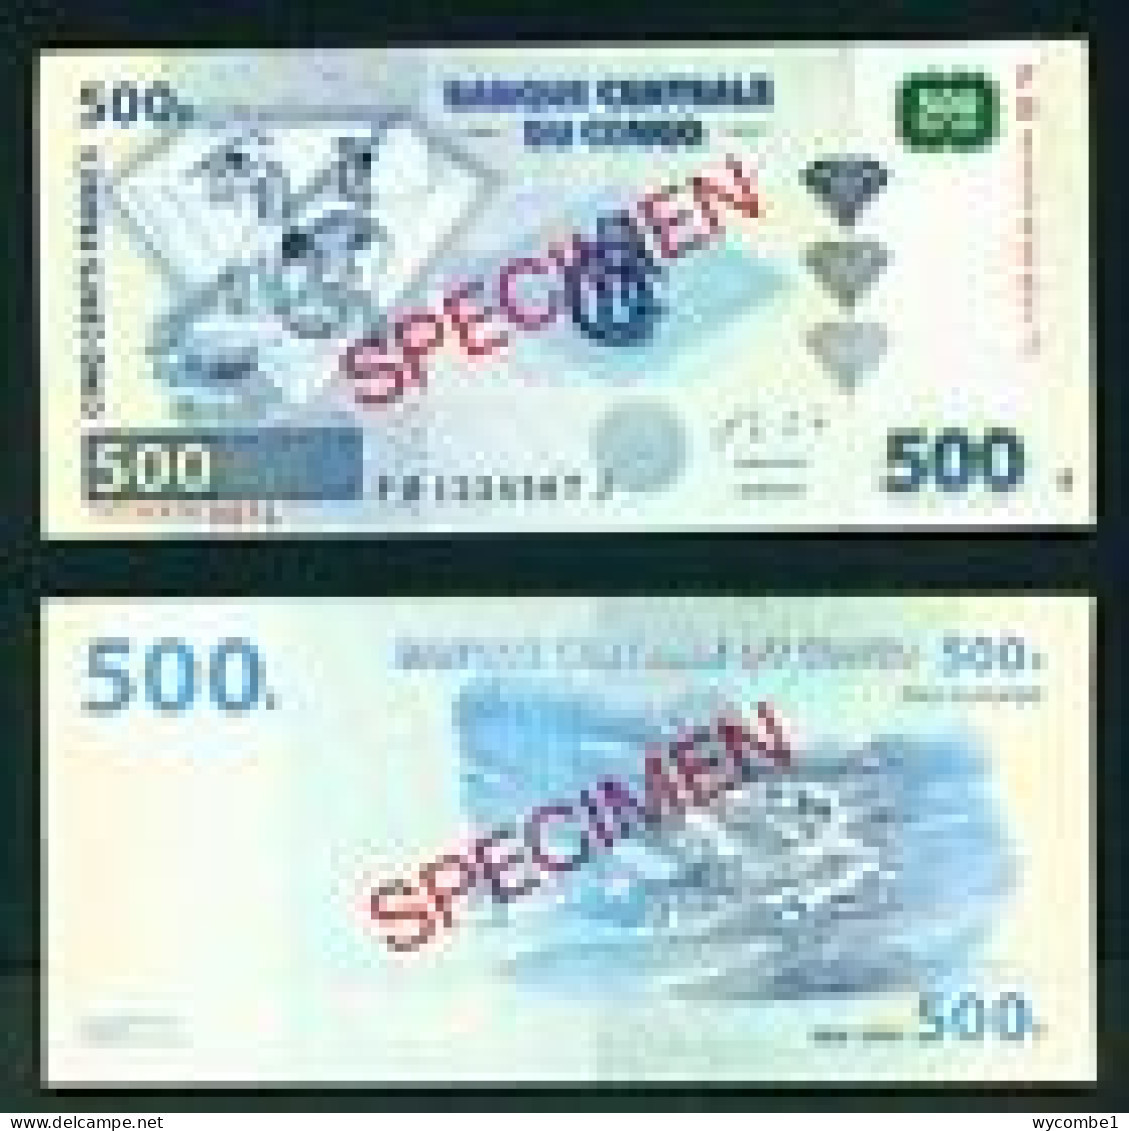 CONGO DR  -  2013 500 Francs Specimen UNC  Banknote - Democratic Republic Of The Congo & Zaire